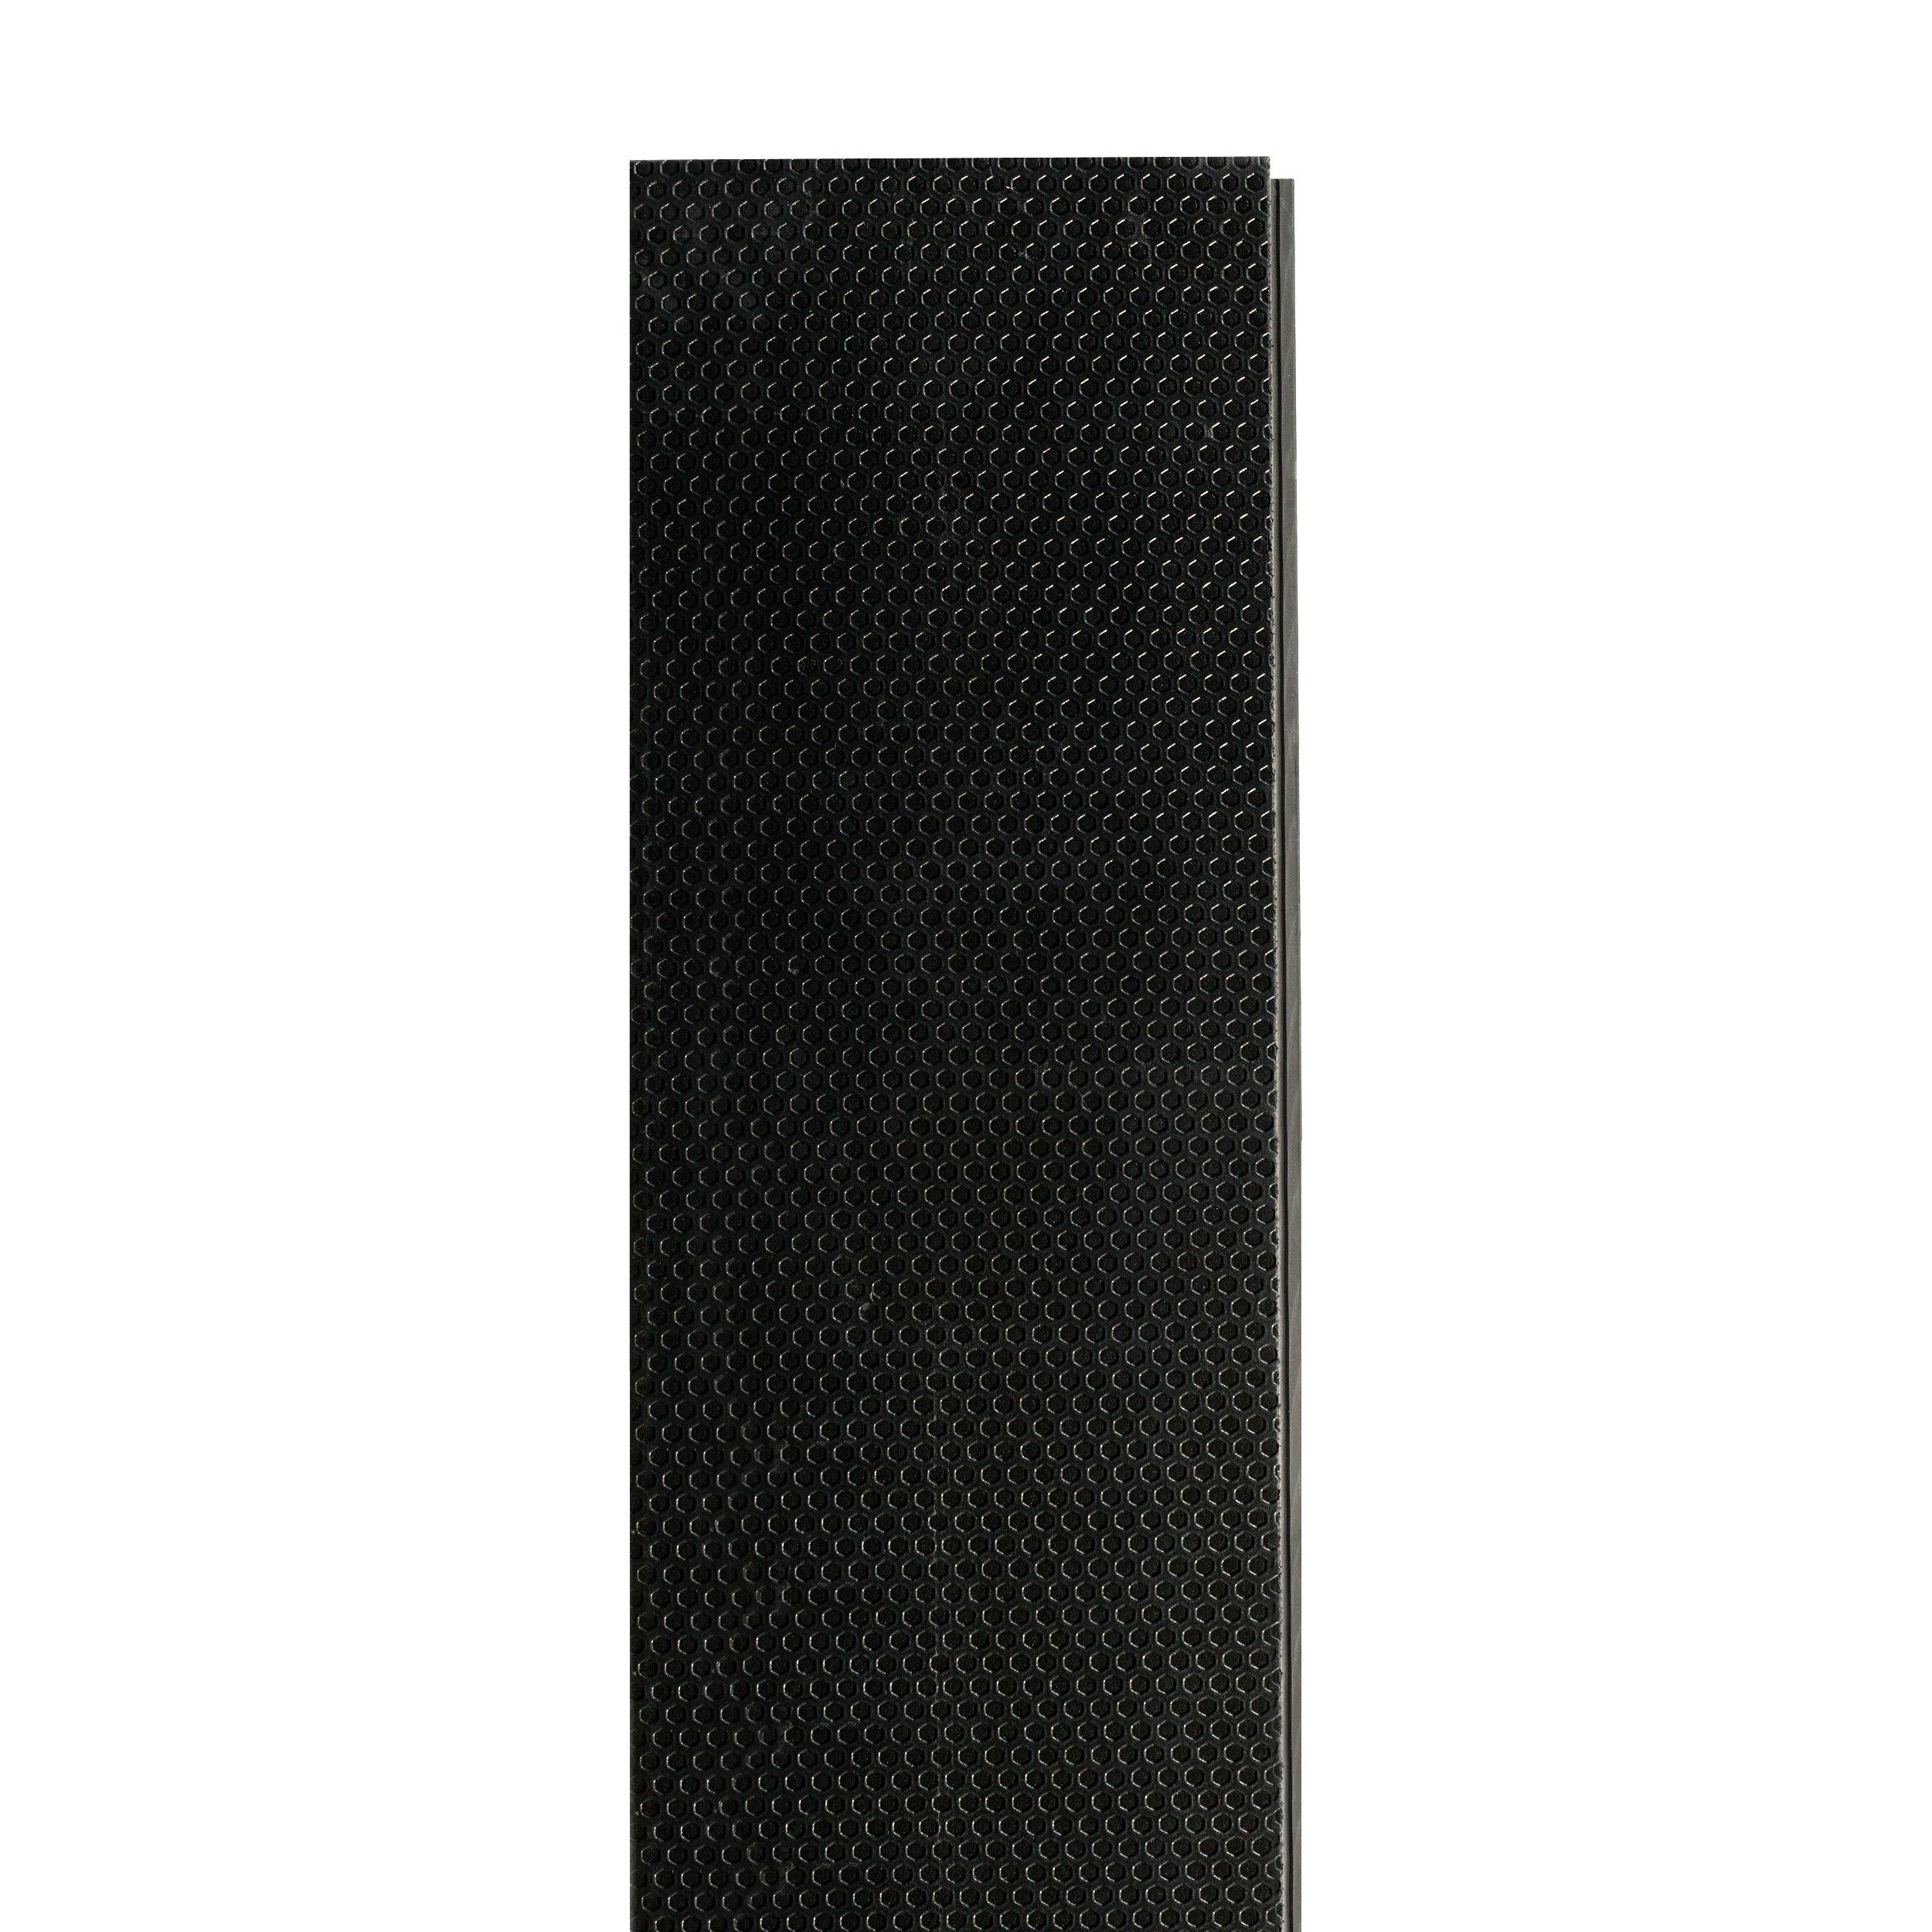 Hillgrove Mist Rigid Core Luxury Vinyl Plank - Foam Back